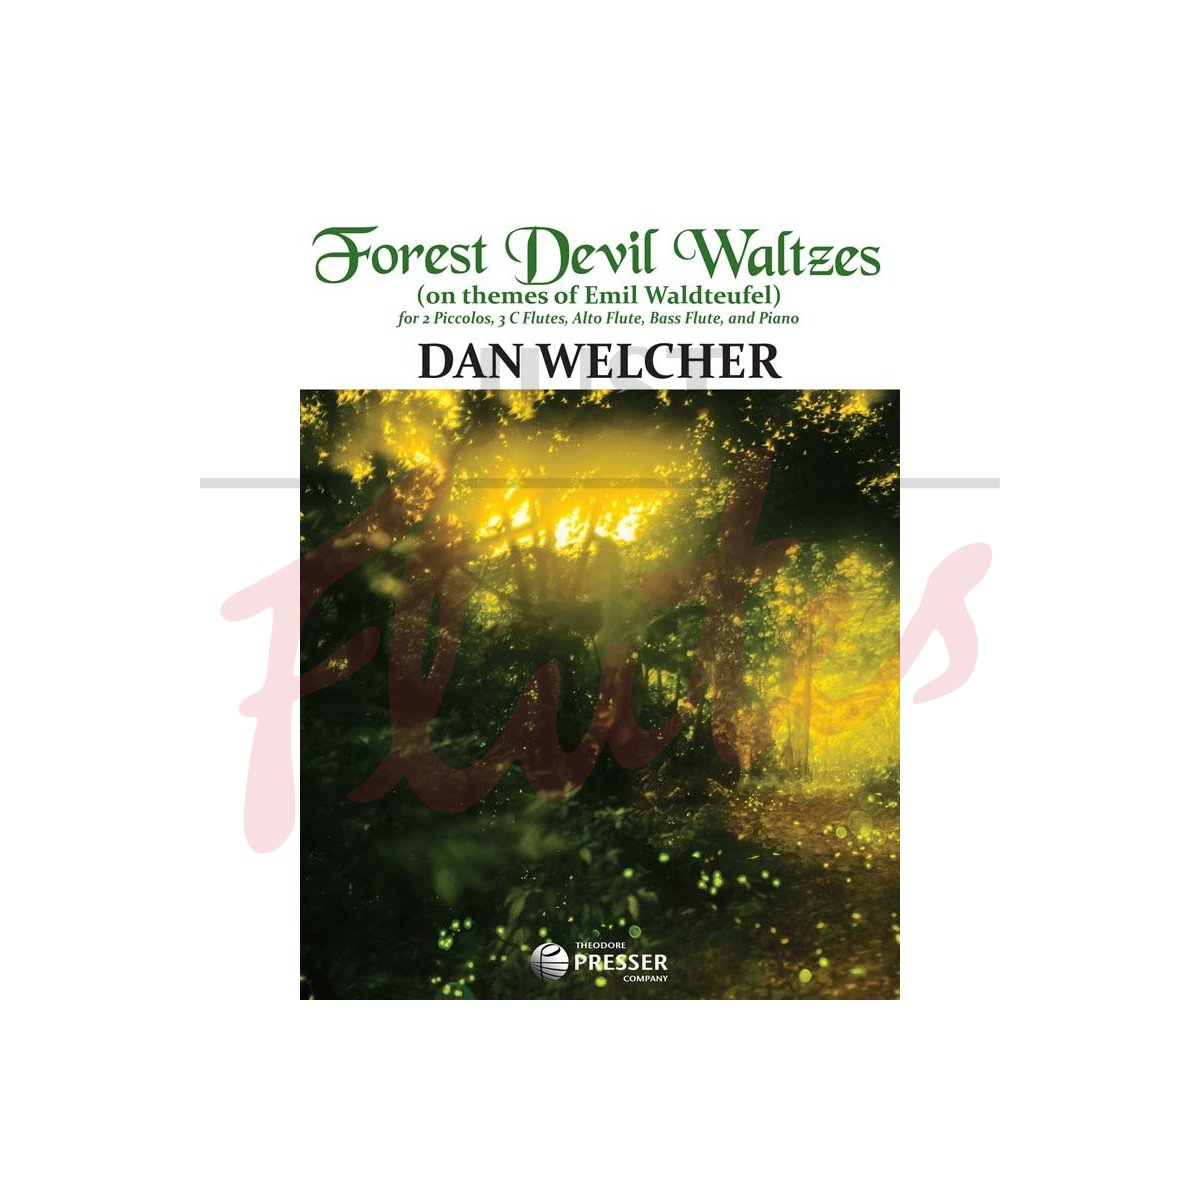 Forest Devil Waltzes (on themes of Emil Waldteufel)